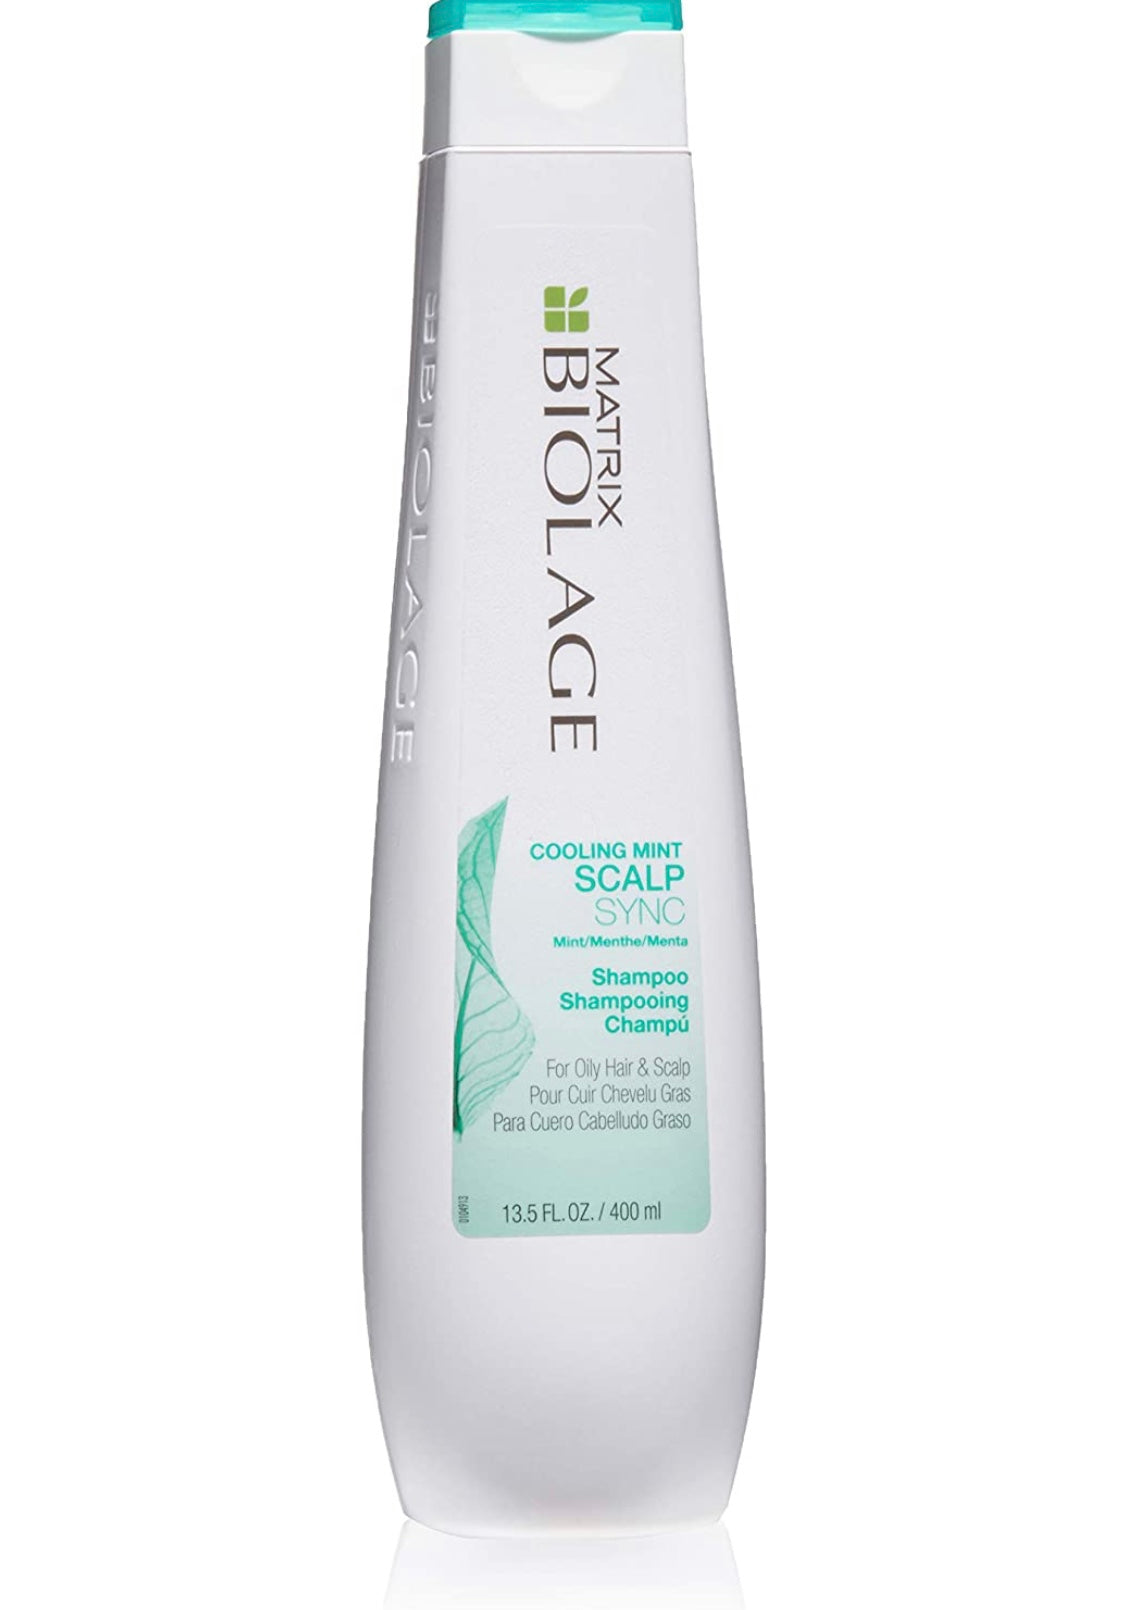 Matrix -Biolage Cooling mint scalp sync shampoo 13.5 fl. oz./ 400 ml